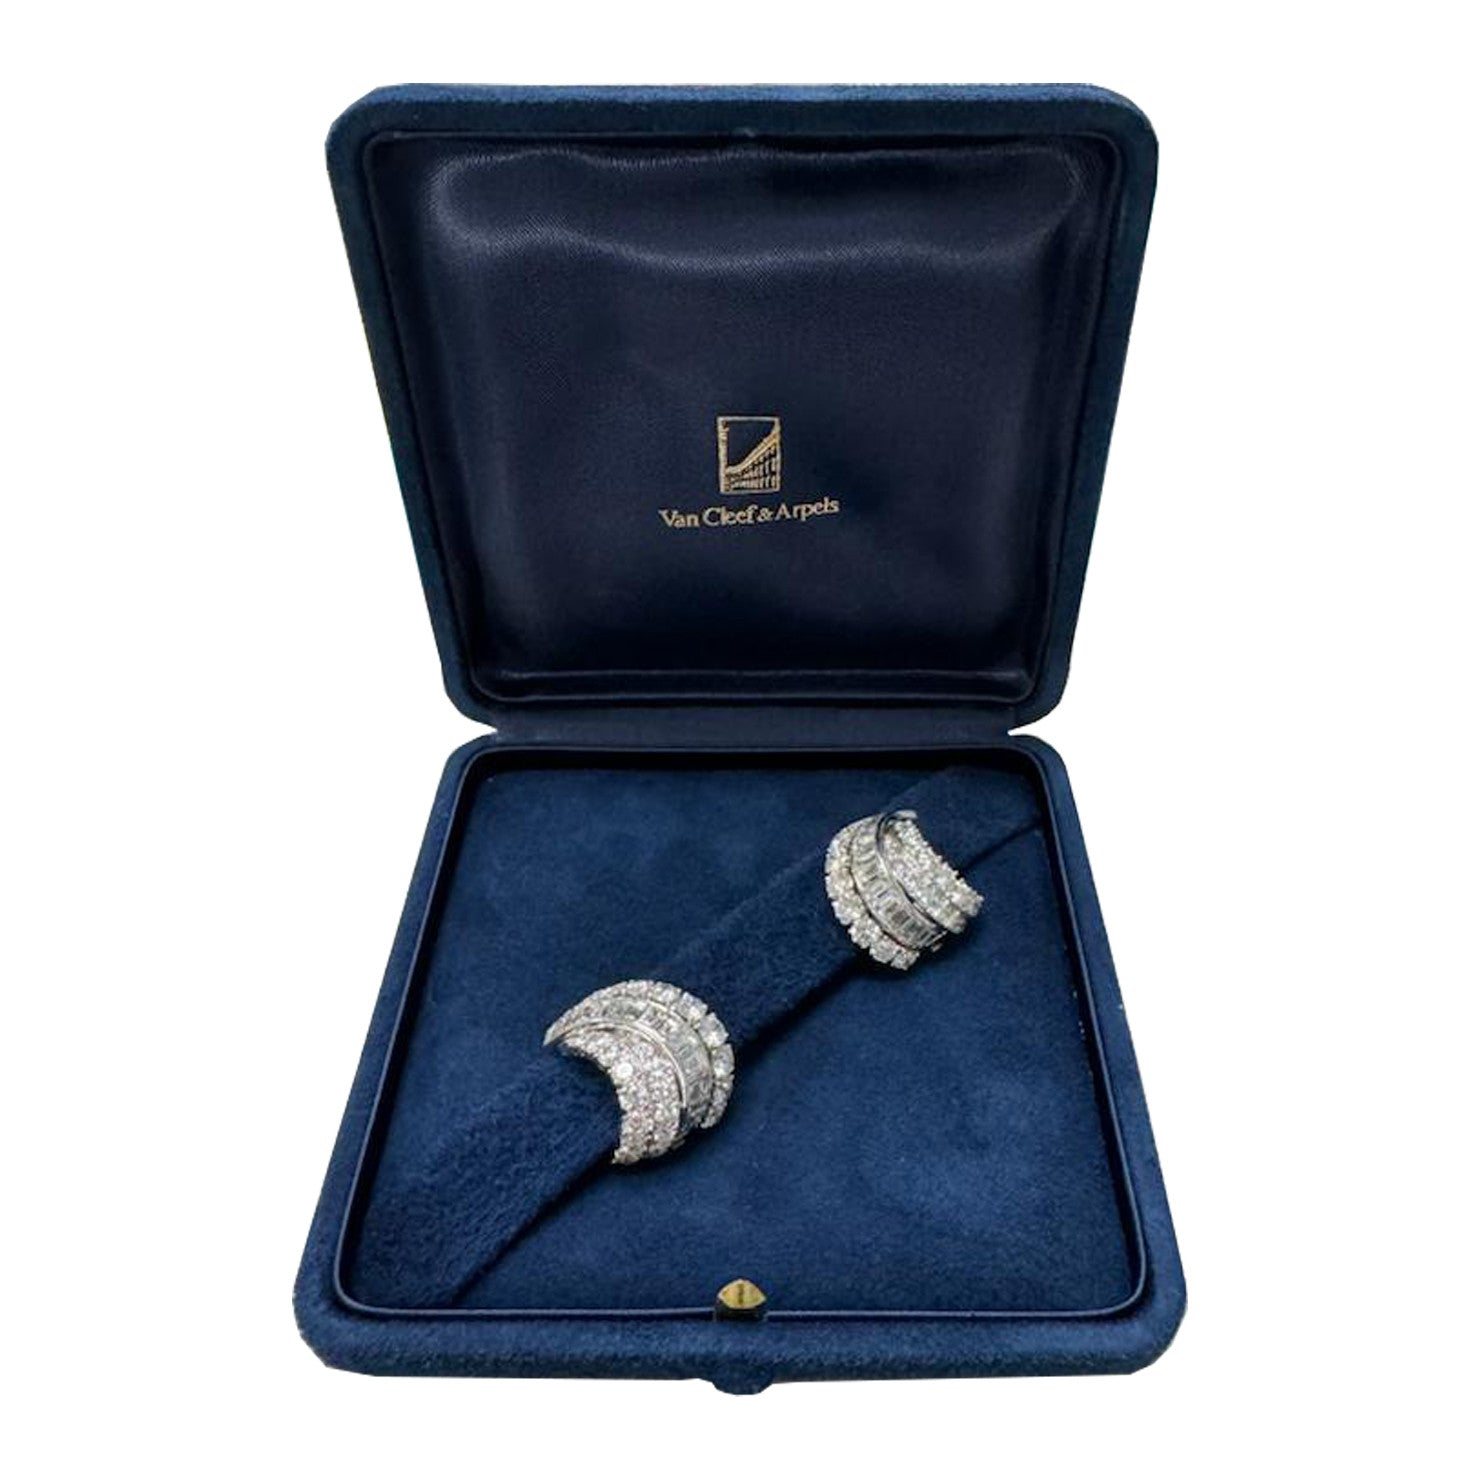 Van Cleef & Arpels French 1970s 18KT White Gold Diamond Earrings in box